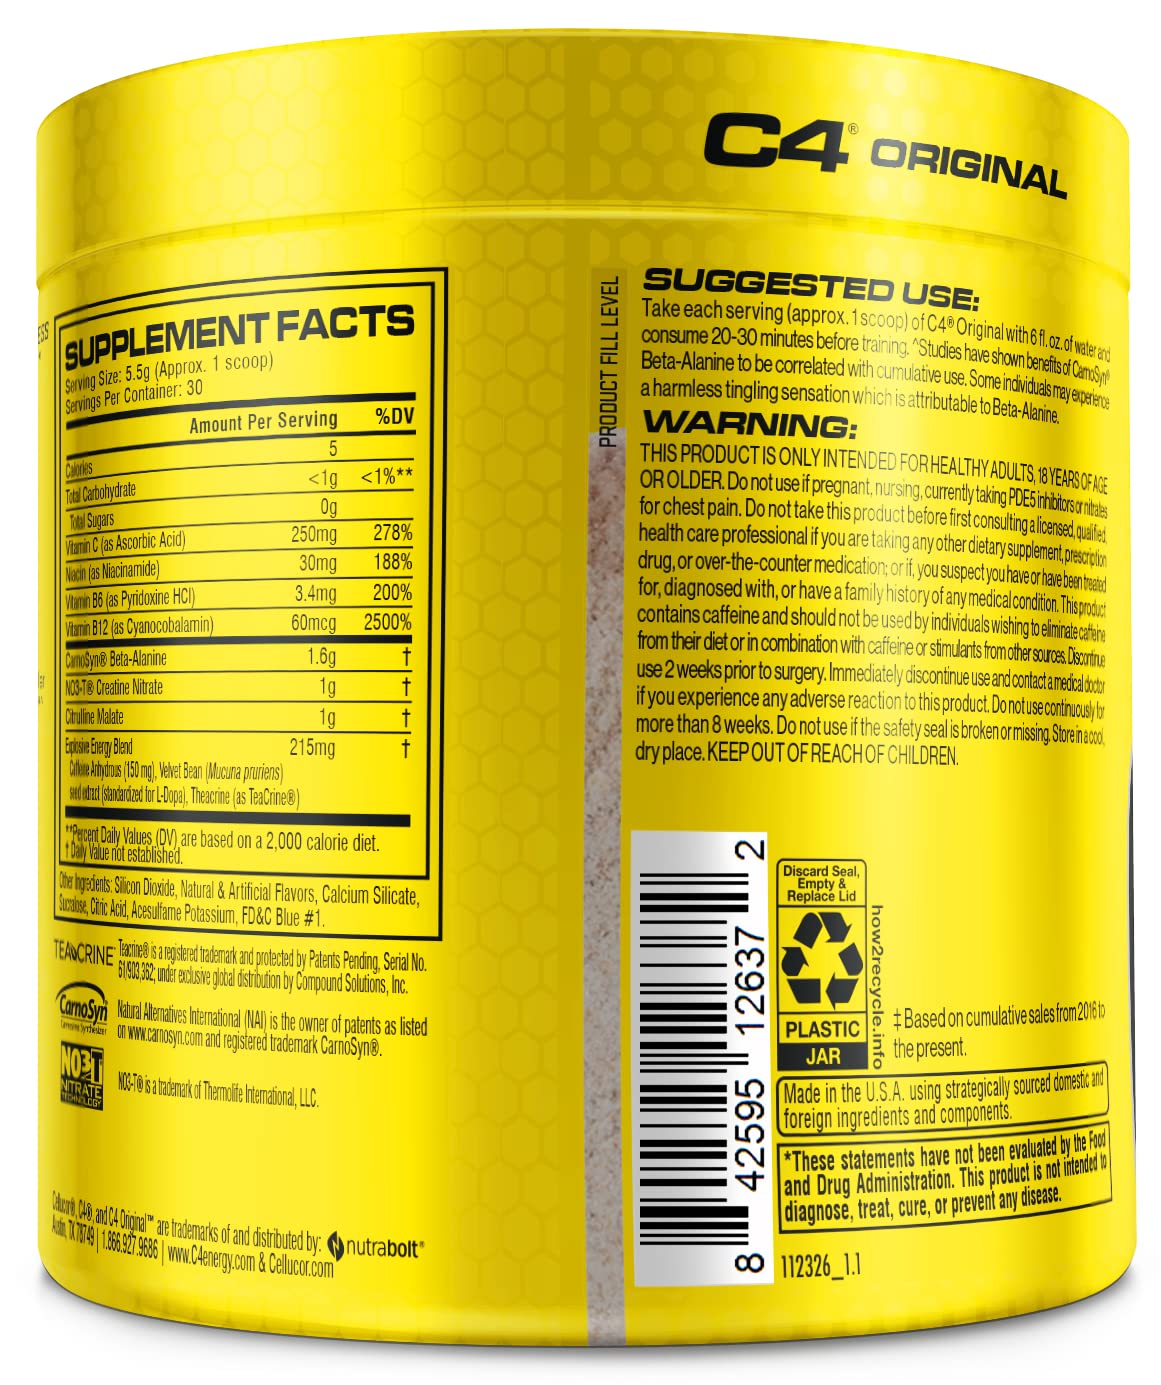 Cellucor C4 Original Pre Workout Powder Grape Sugar Free Preworkout Energy for Men & Women 150mg Caffeine + Beta Alanine + Creatine - 30 Servings (Packaging May Vary)